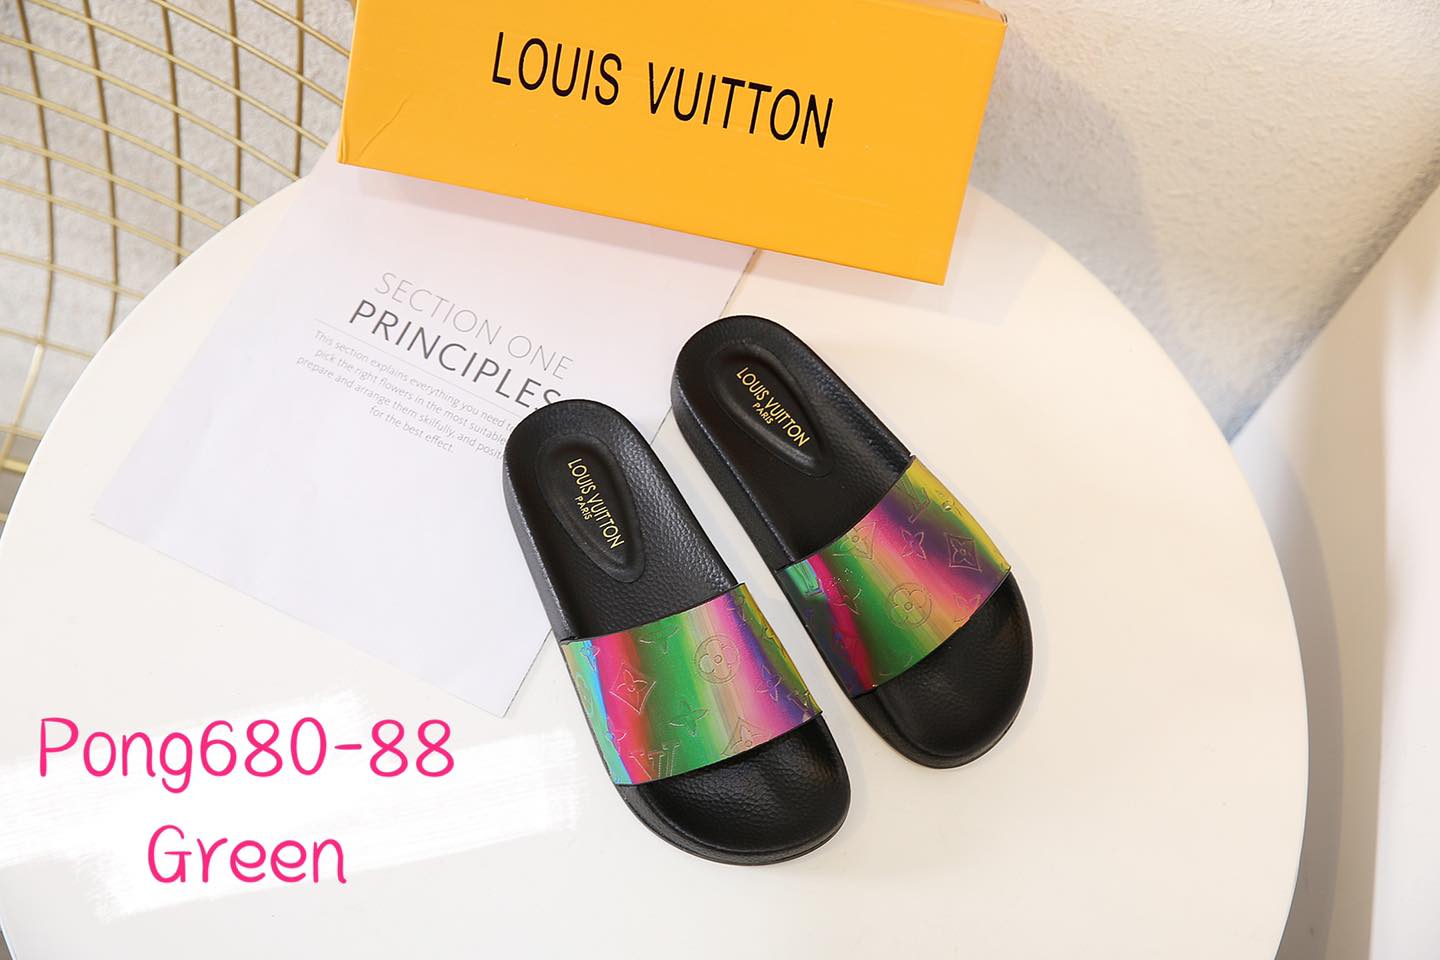 LV680-88 Iridescent Prism Slides Shoes StyleMoto Green 35 